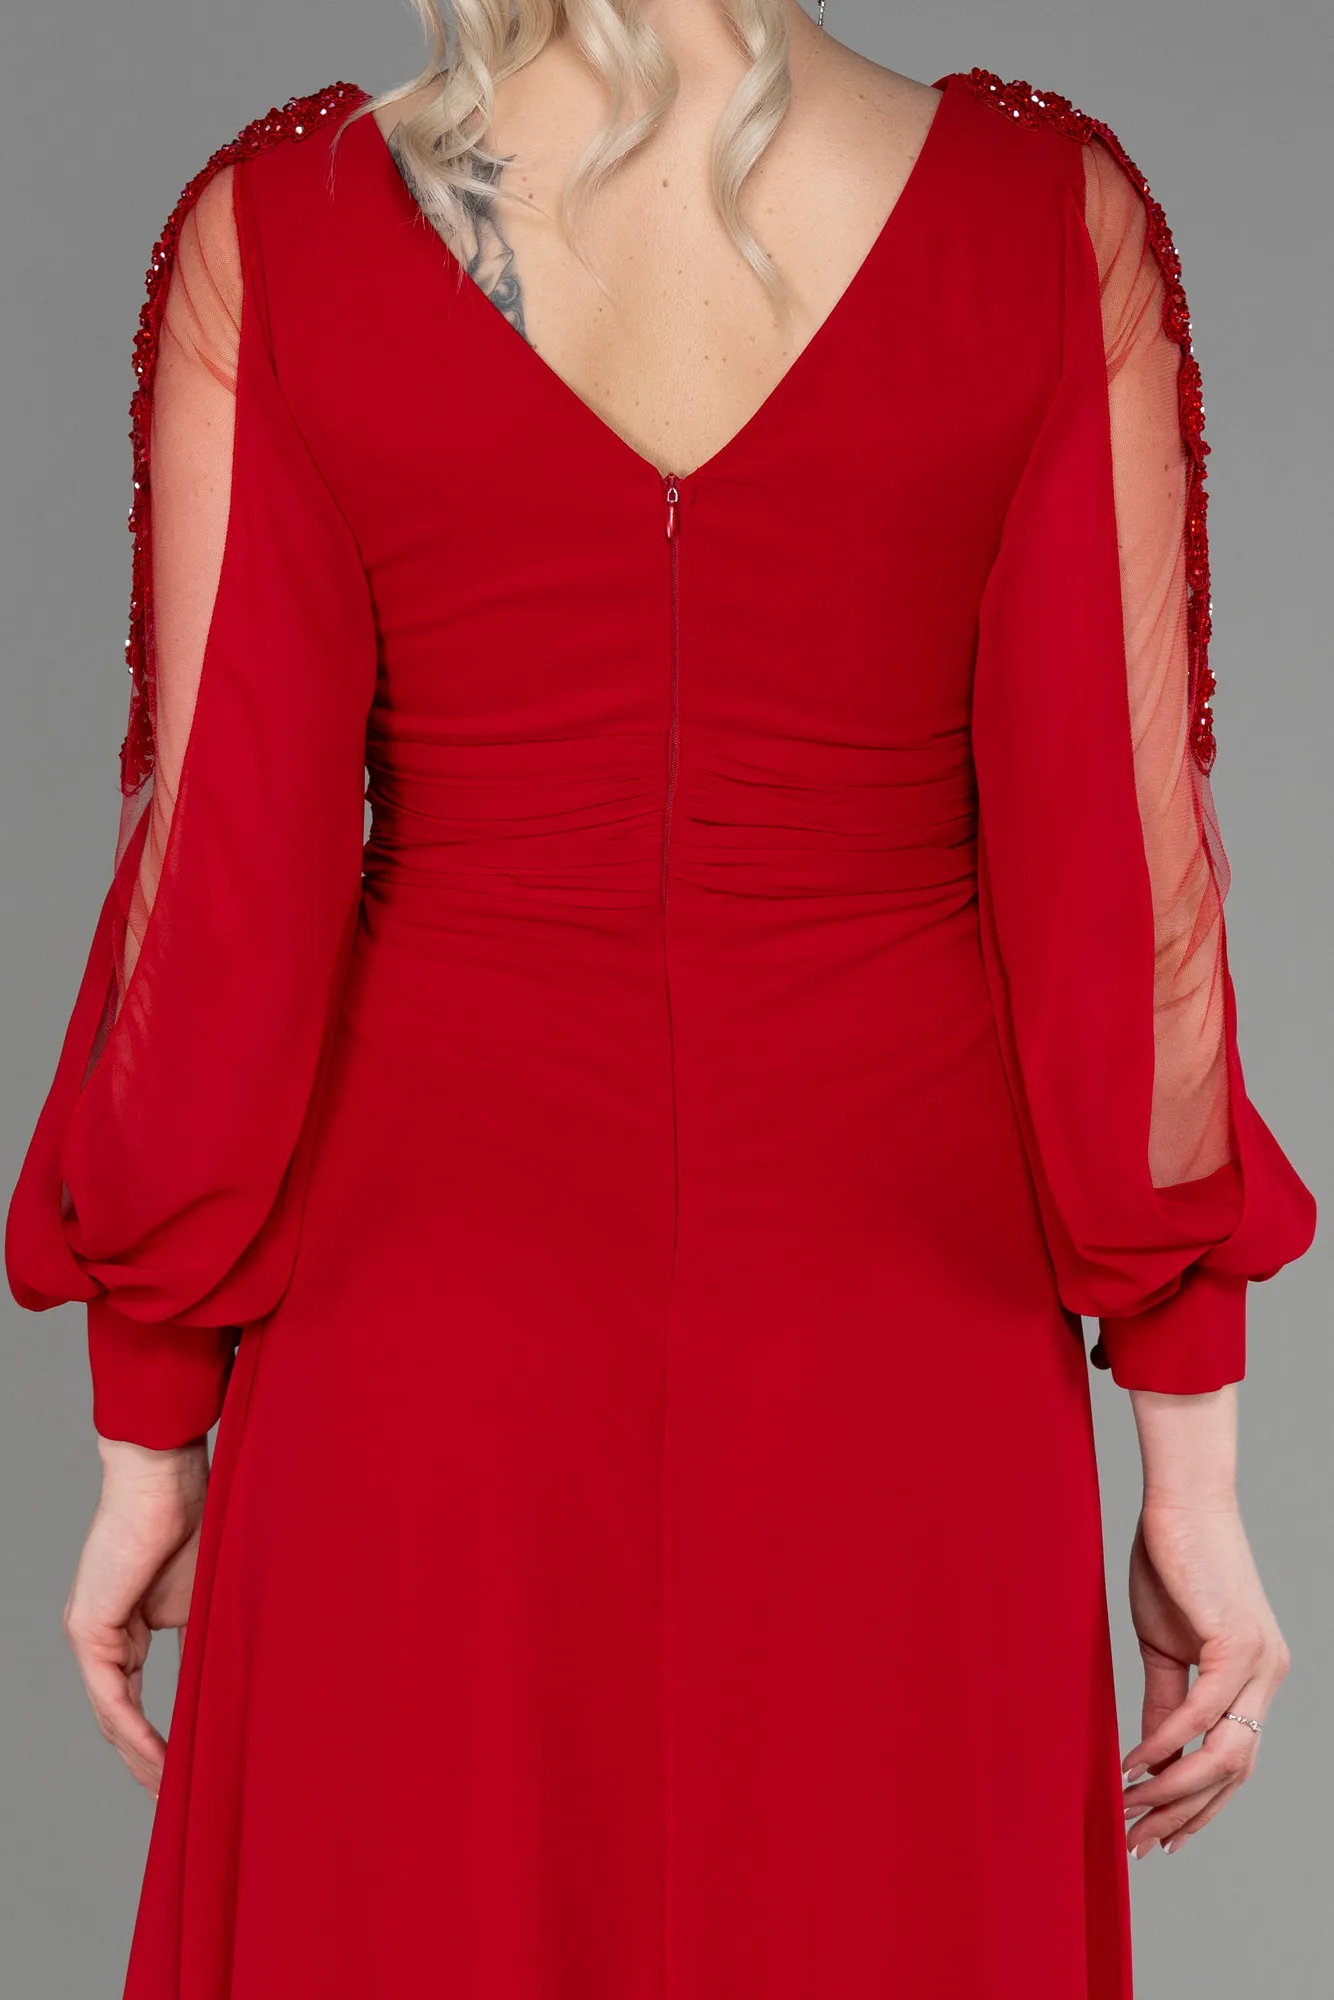 Red-Long Chiffon Evening Dress ABU3220